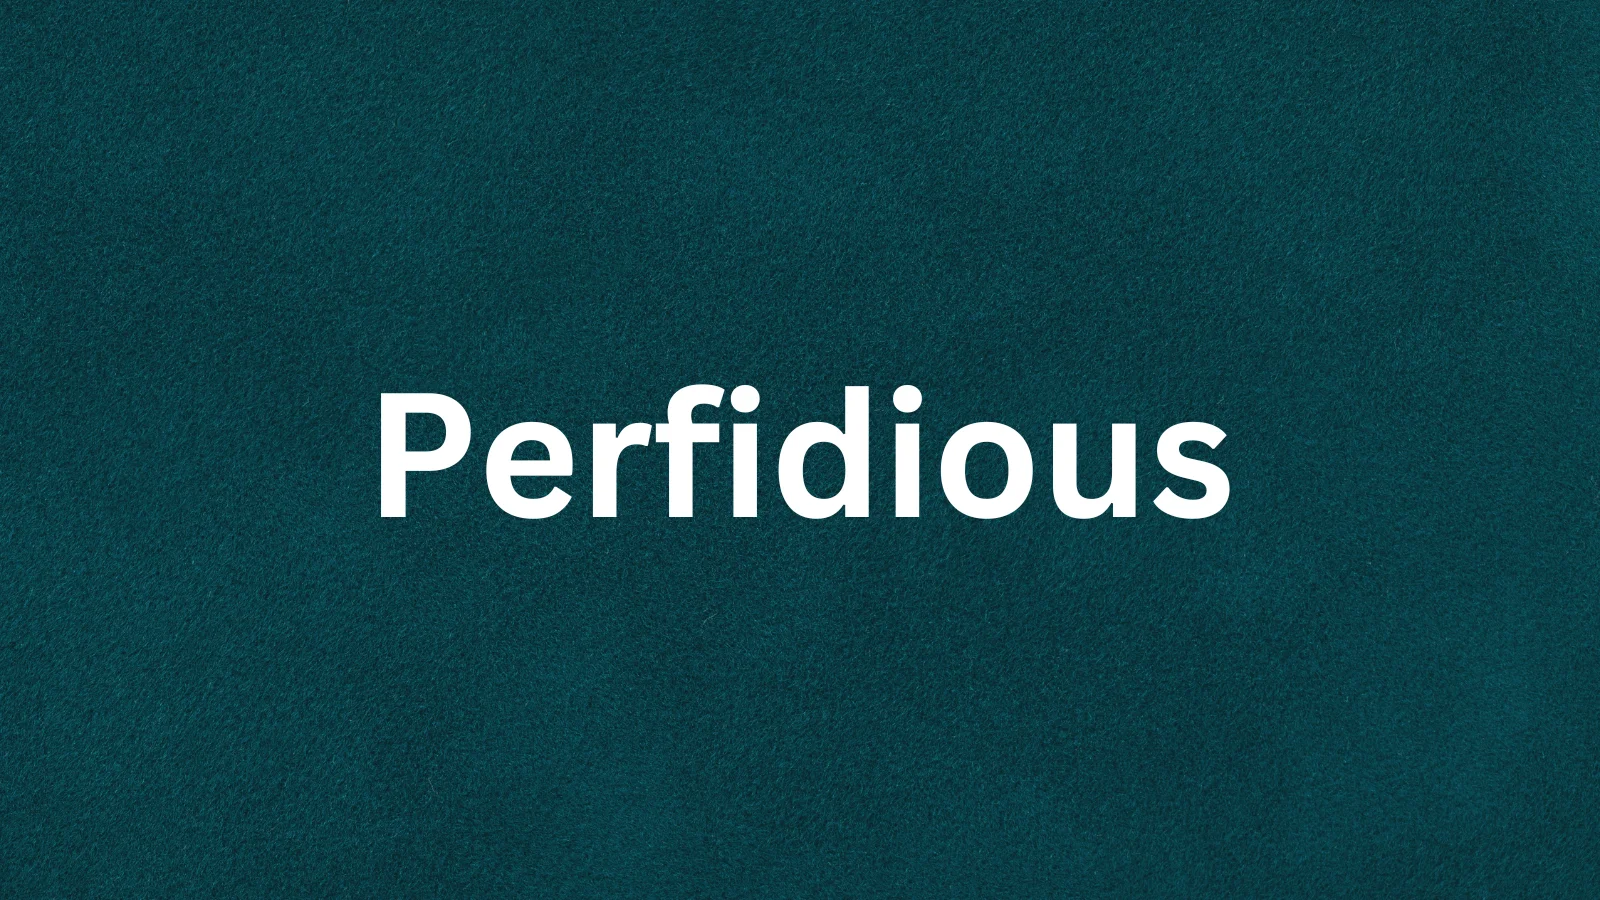 Perfidious